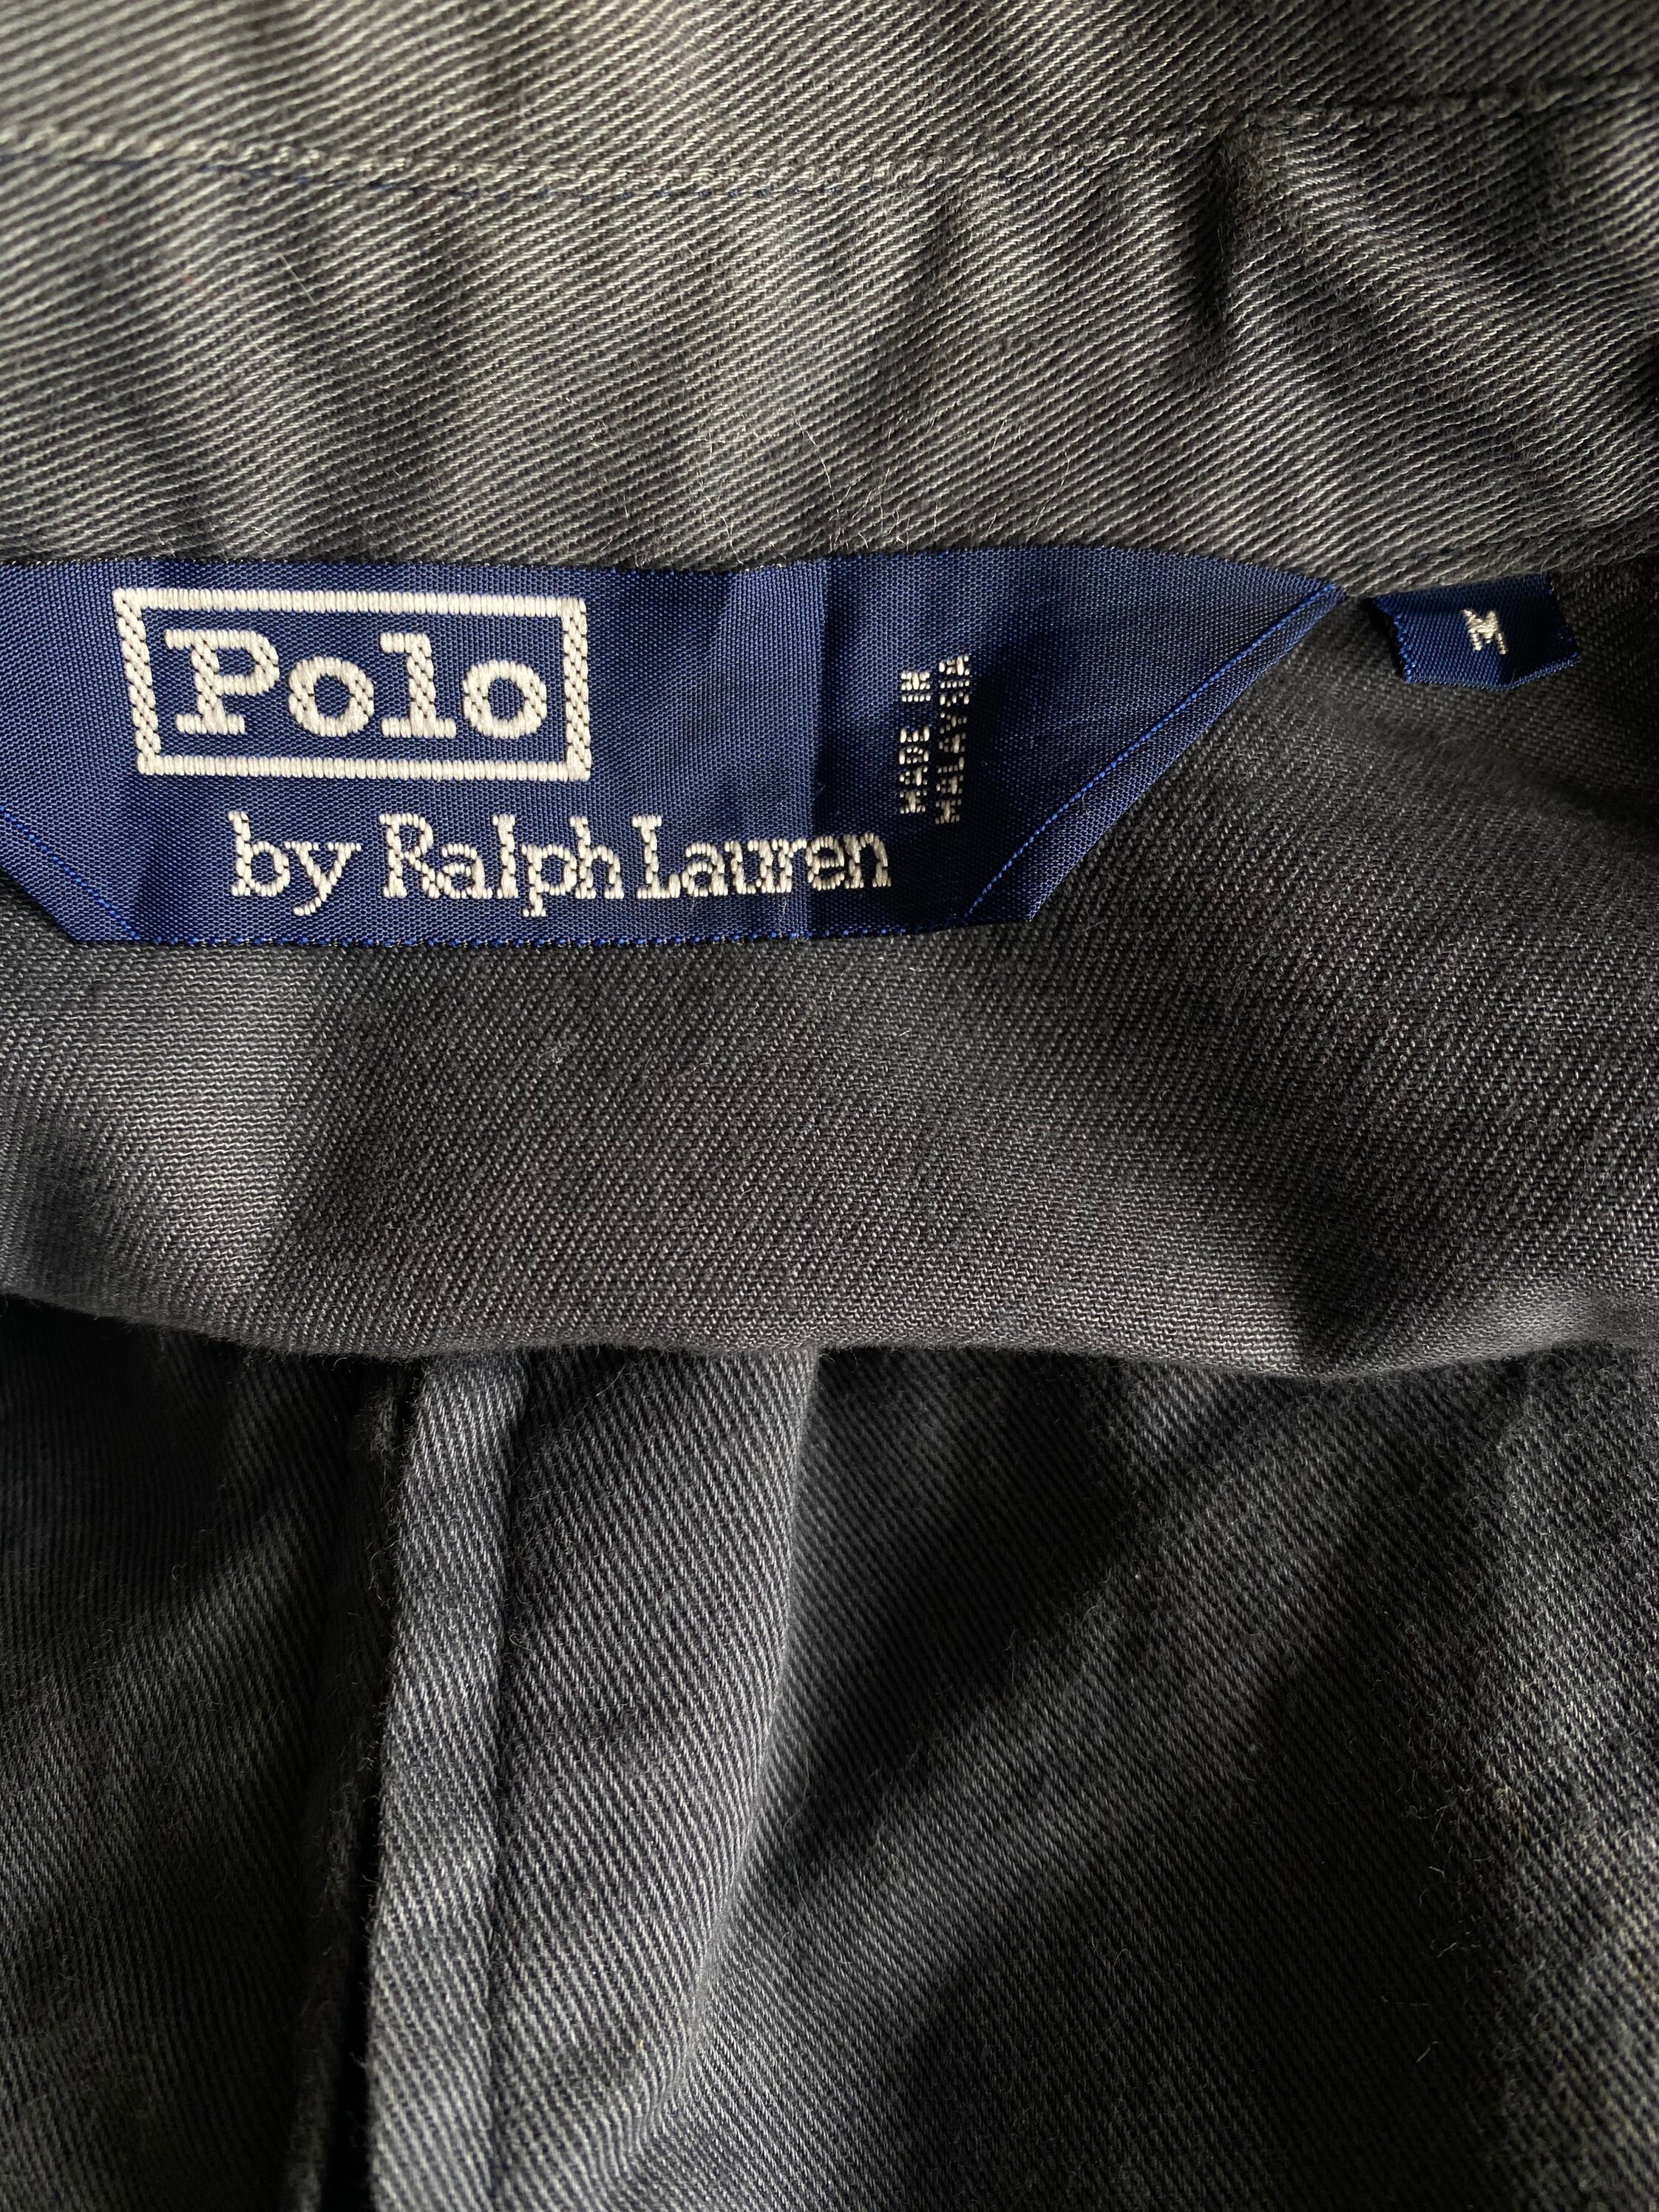 Polo Ralph Lauren Vintage 90s Harrington Jacket | Etsy